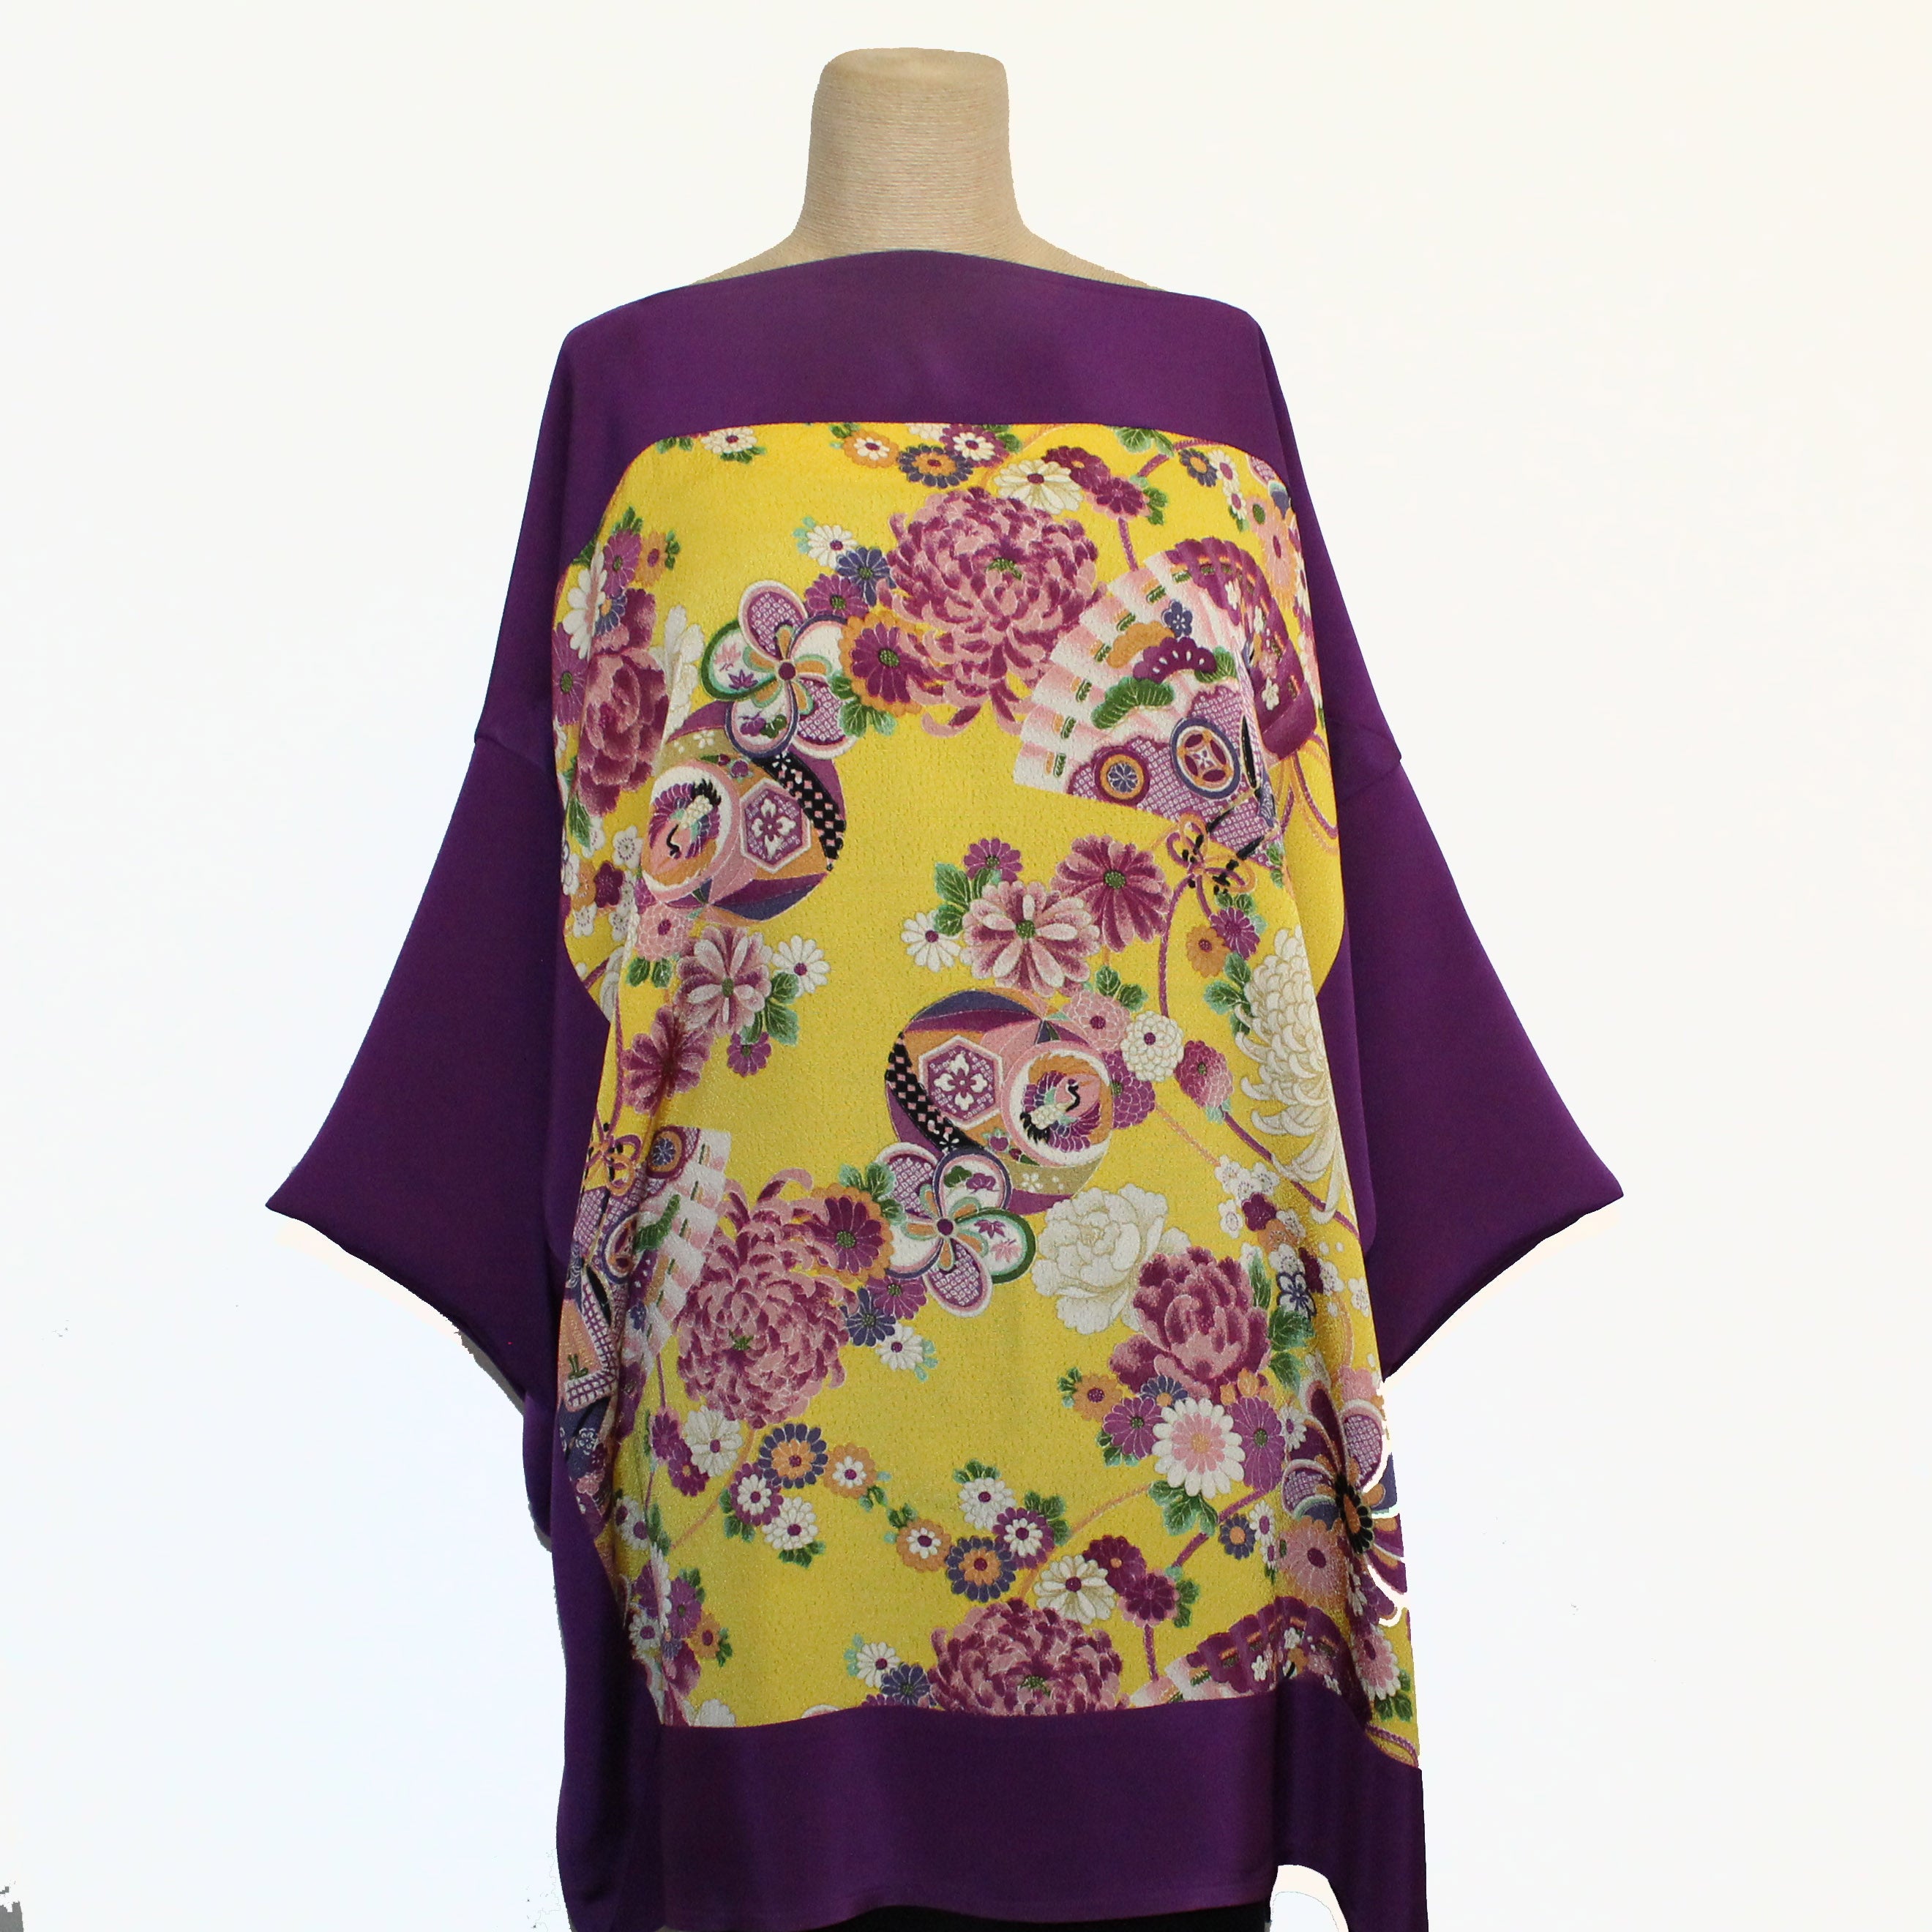 Constance West Kimono, Court Carriage, Yellow/Purple, OS